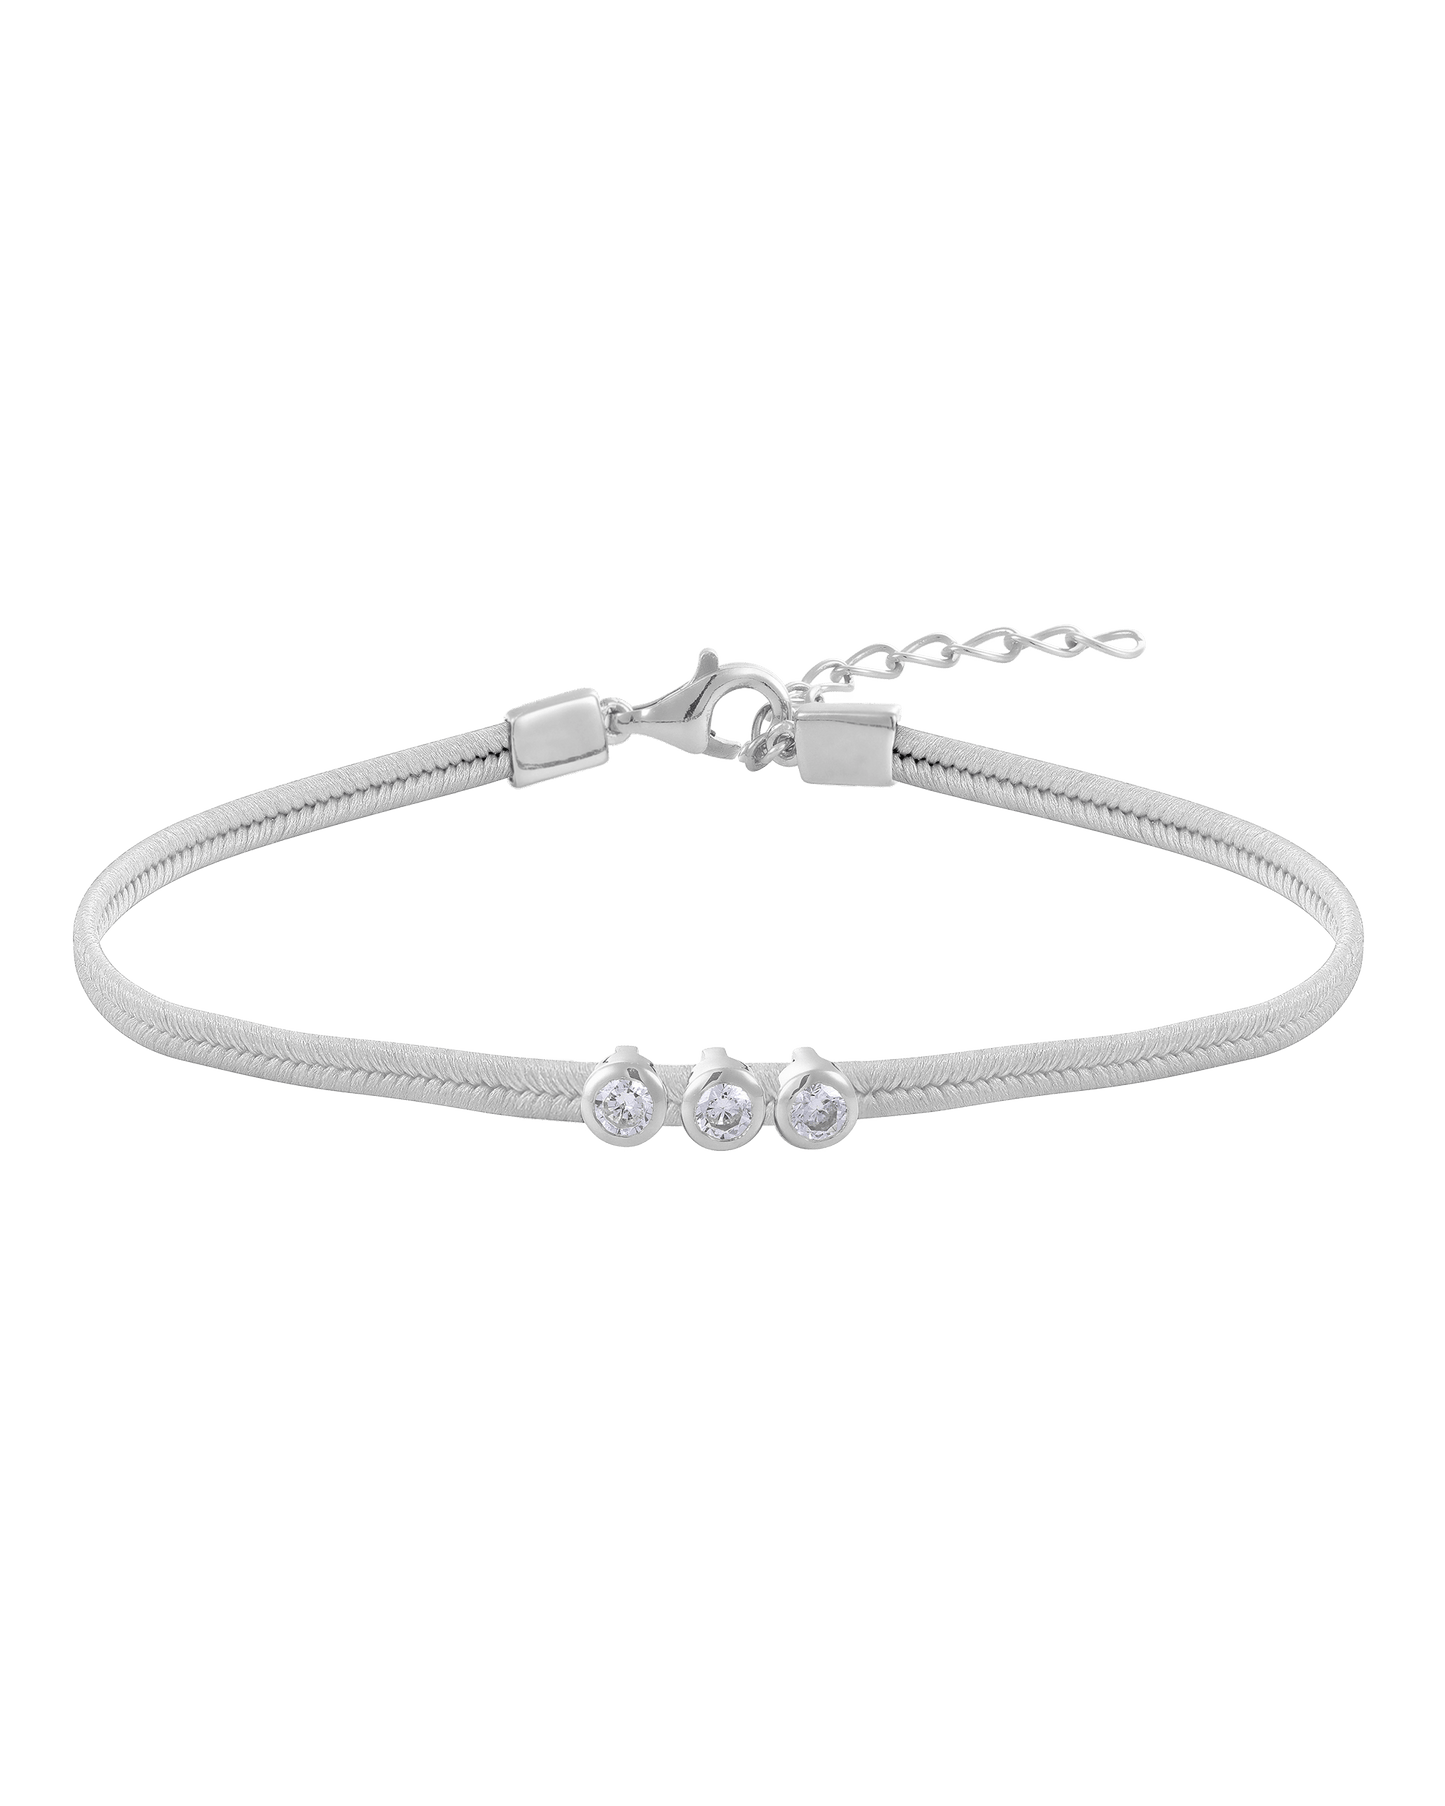 The Cord of Love - 925 Sterling Silver Bracelets magal-dev 1 Diamond Cream 